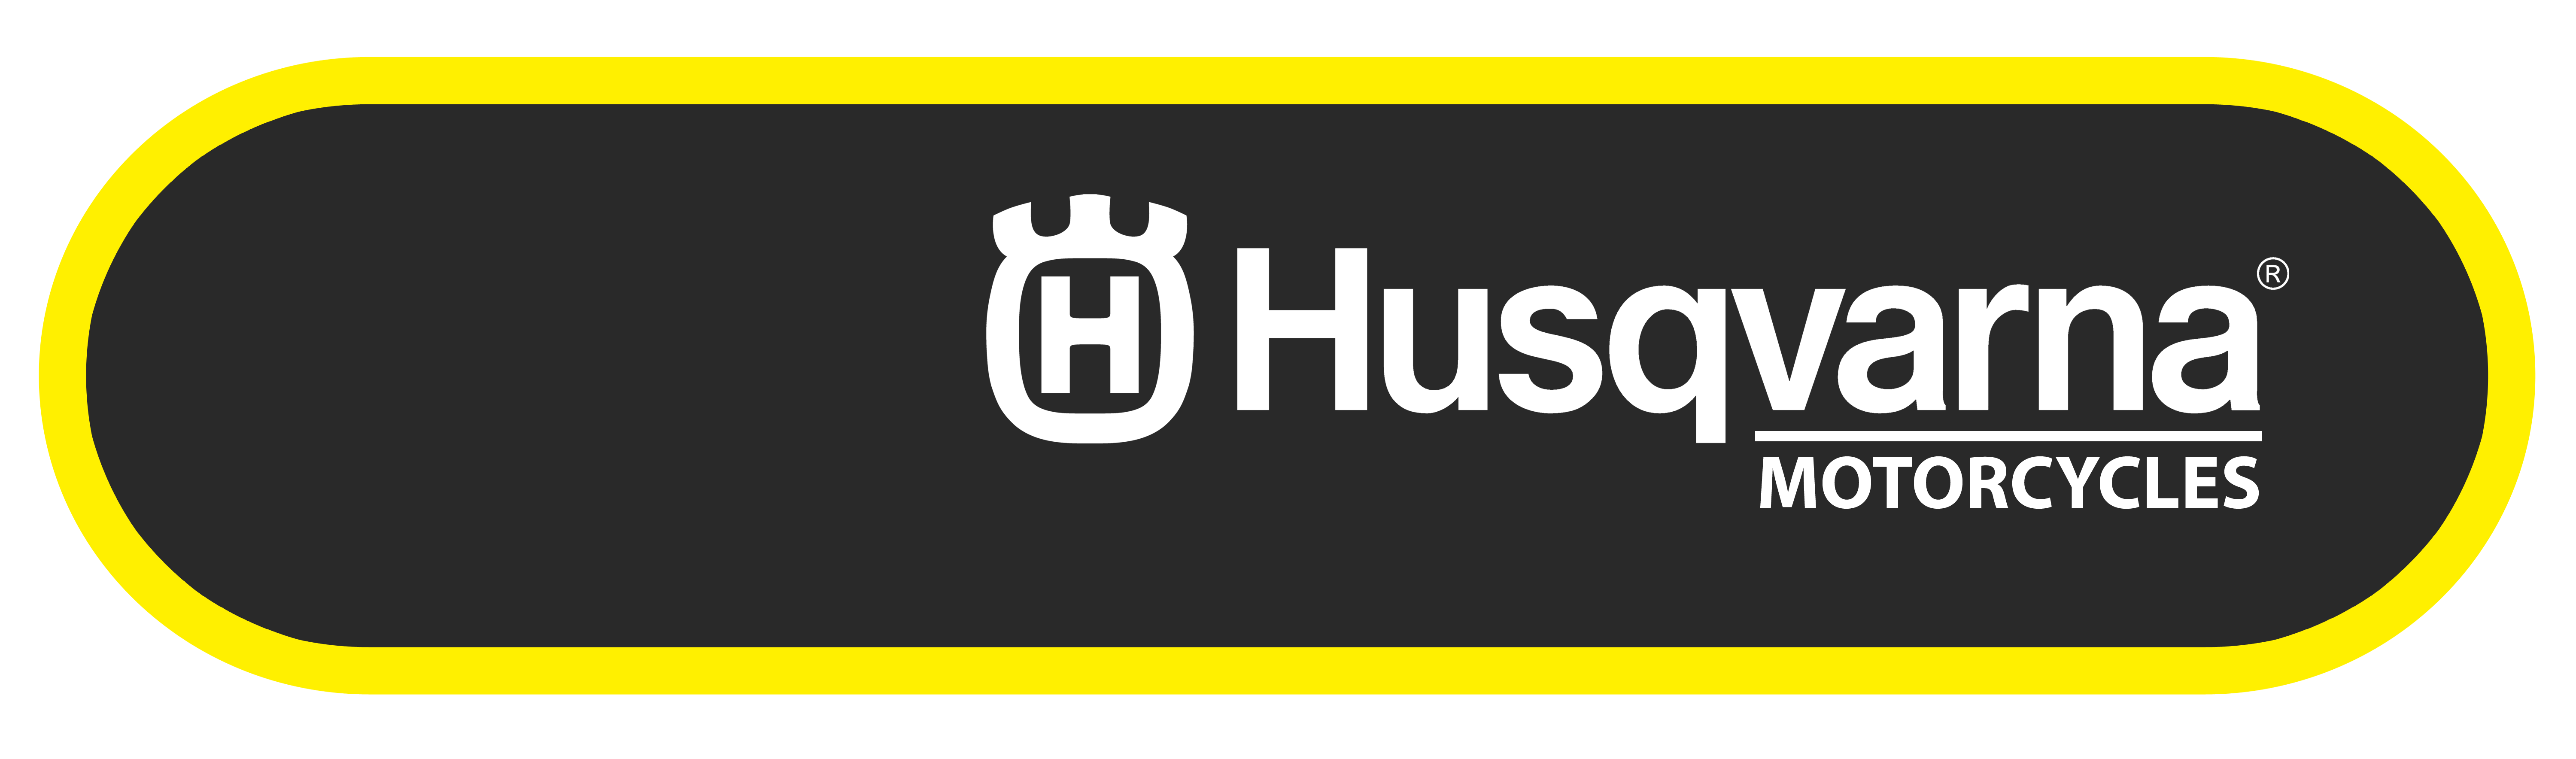 Husqvarna motorcycle logo history and Meaning, bike emblem.